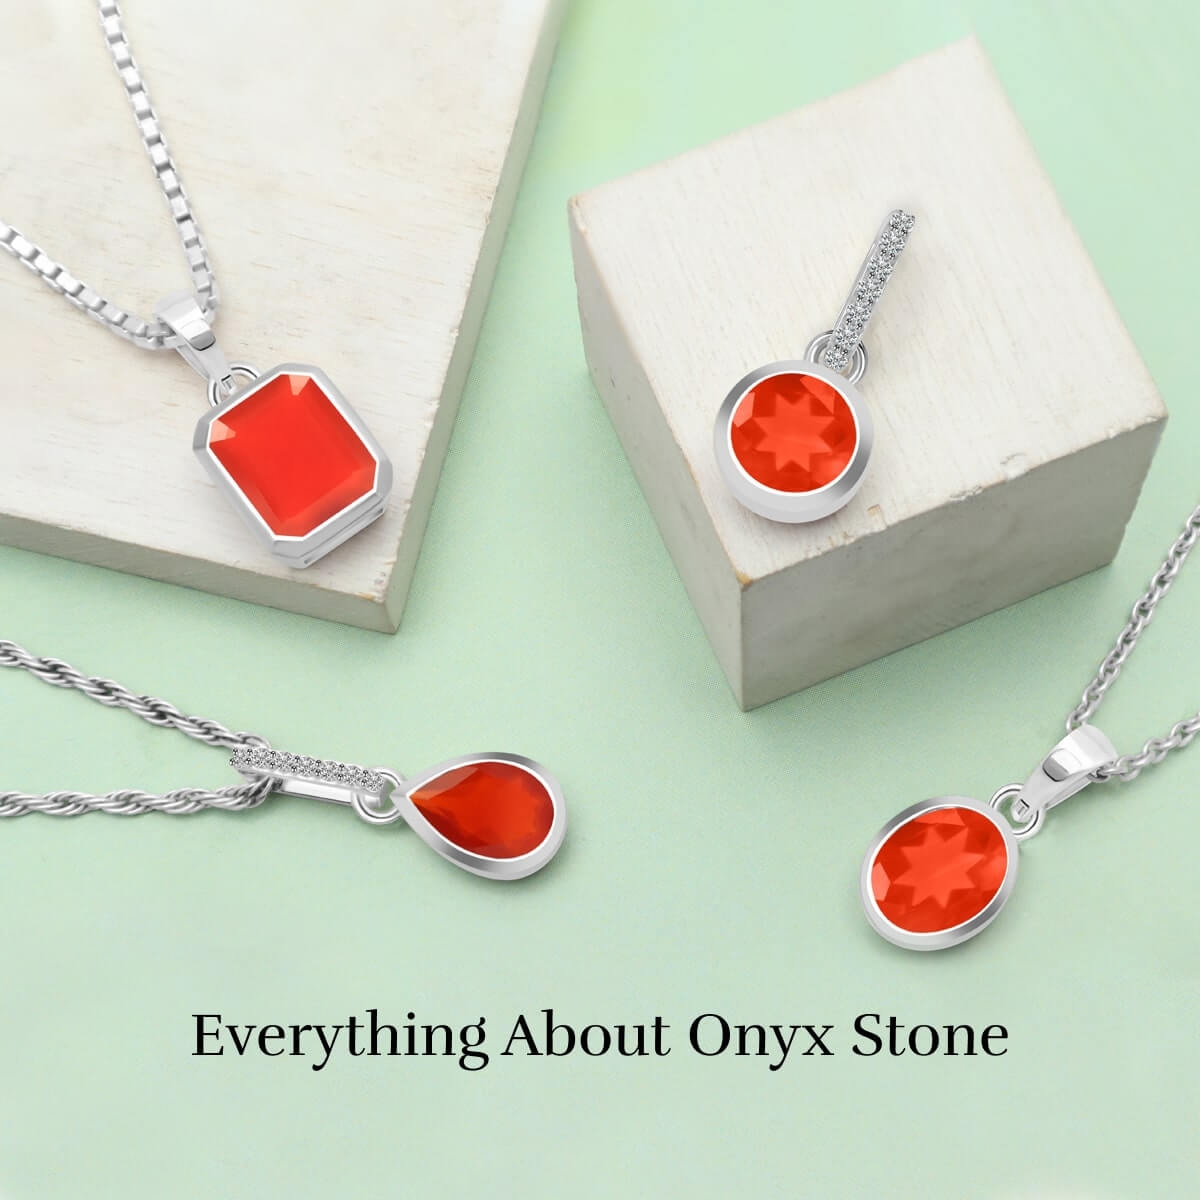 Onyx Stone Meaning & Benefits